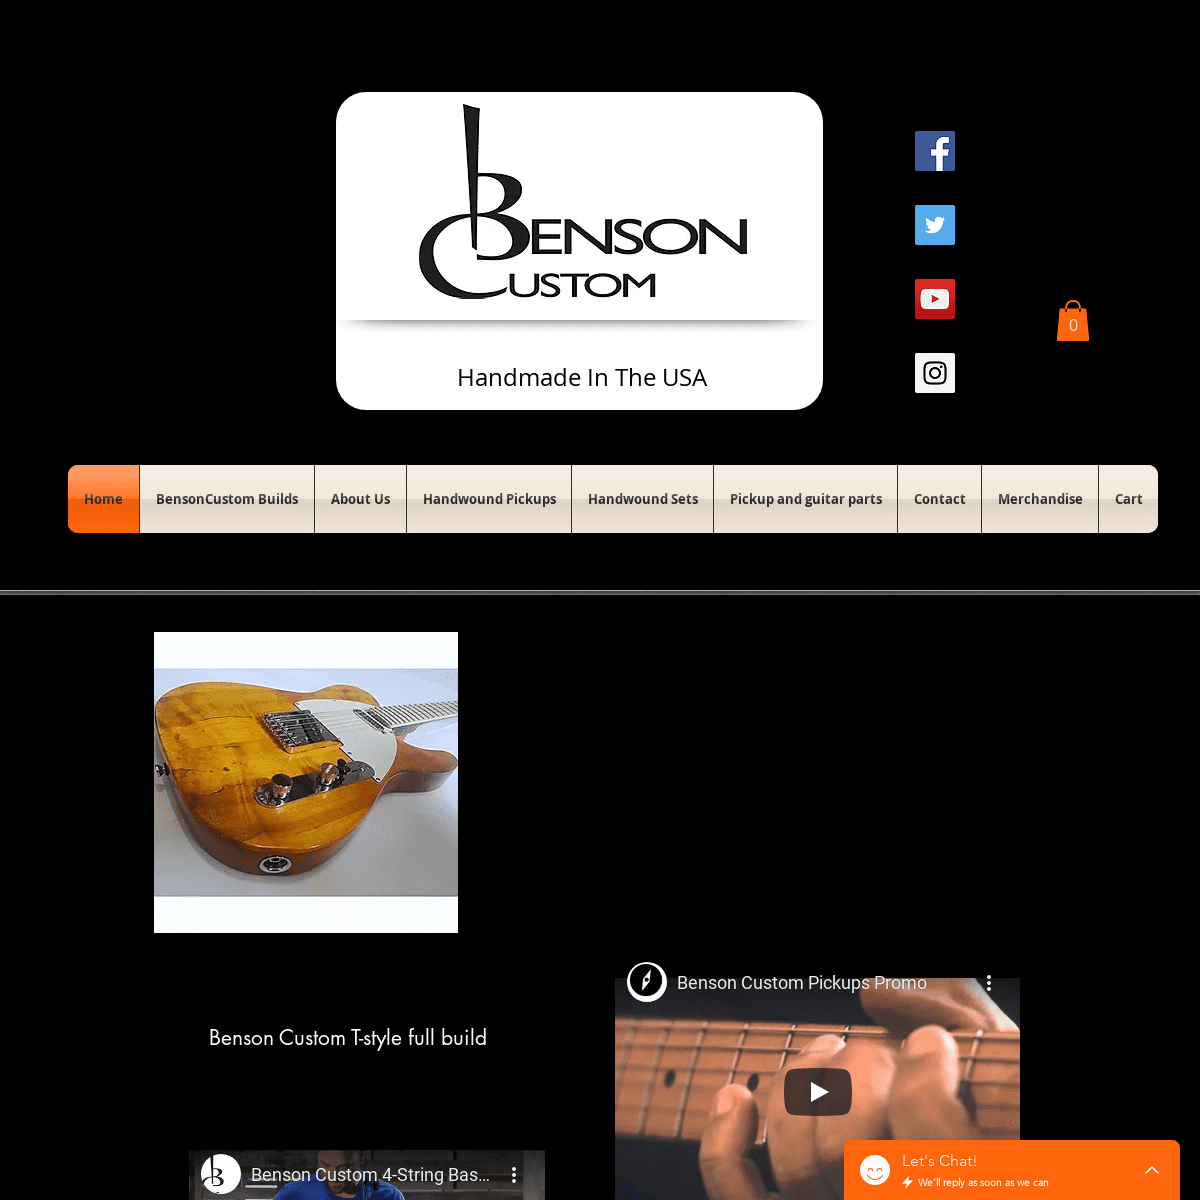 A complete backup of bensoncustom.com